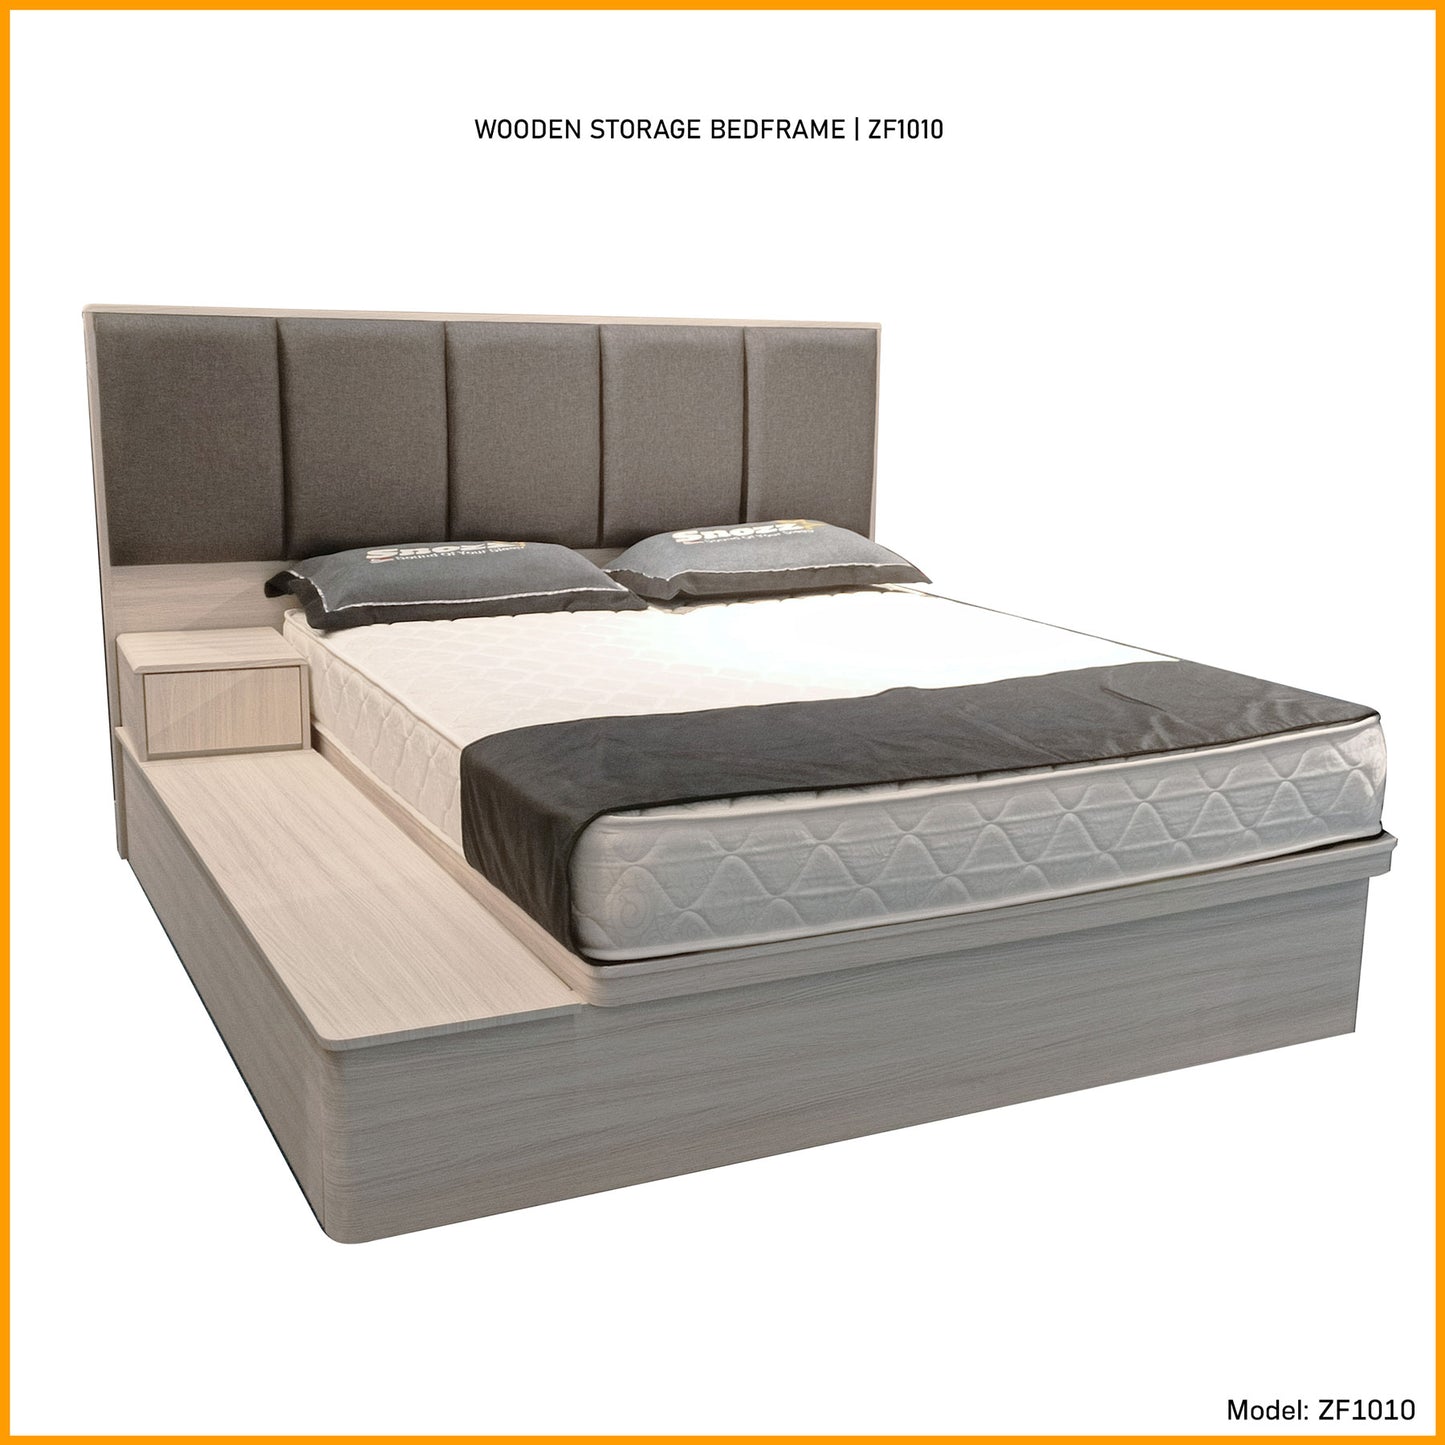 ONLYBEDS | Wooden Storage Bedframe | ZF1010